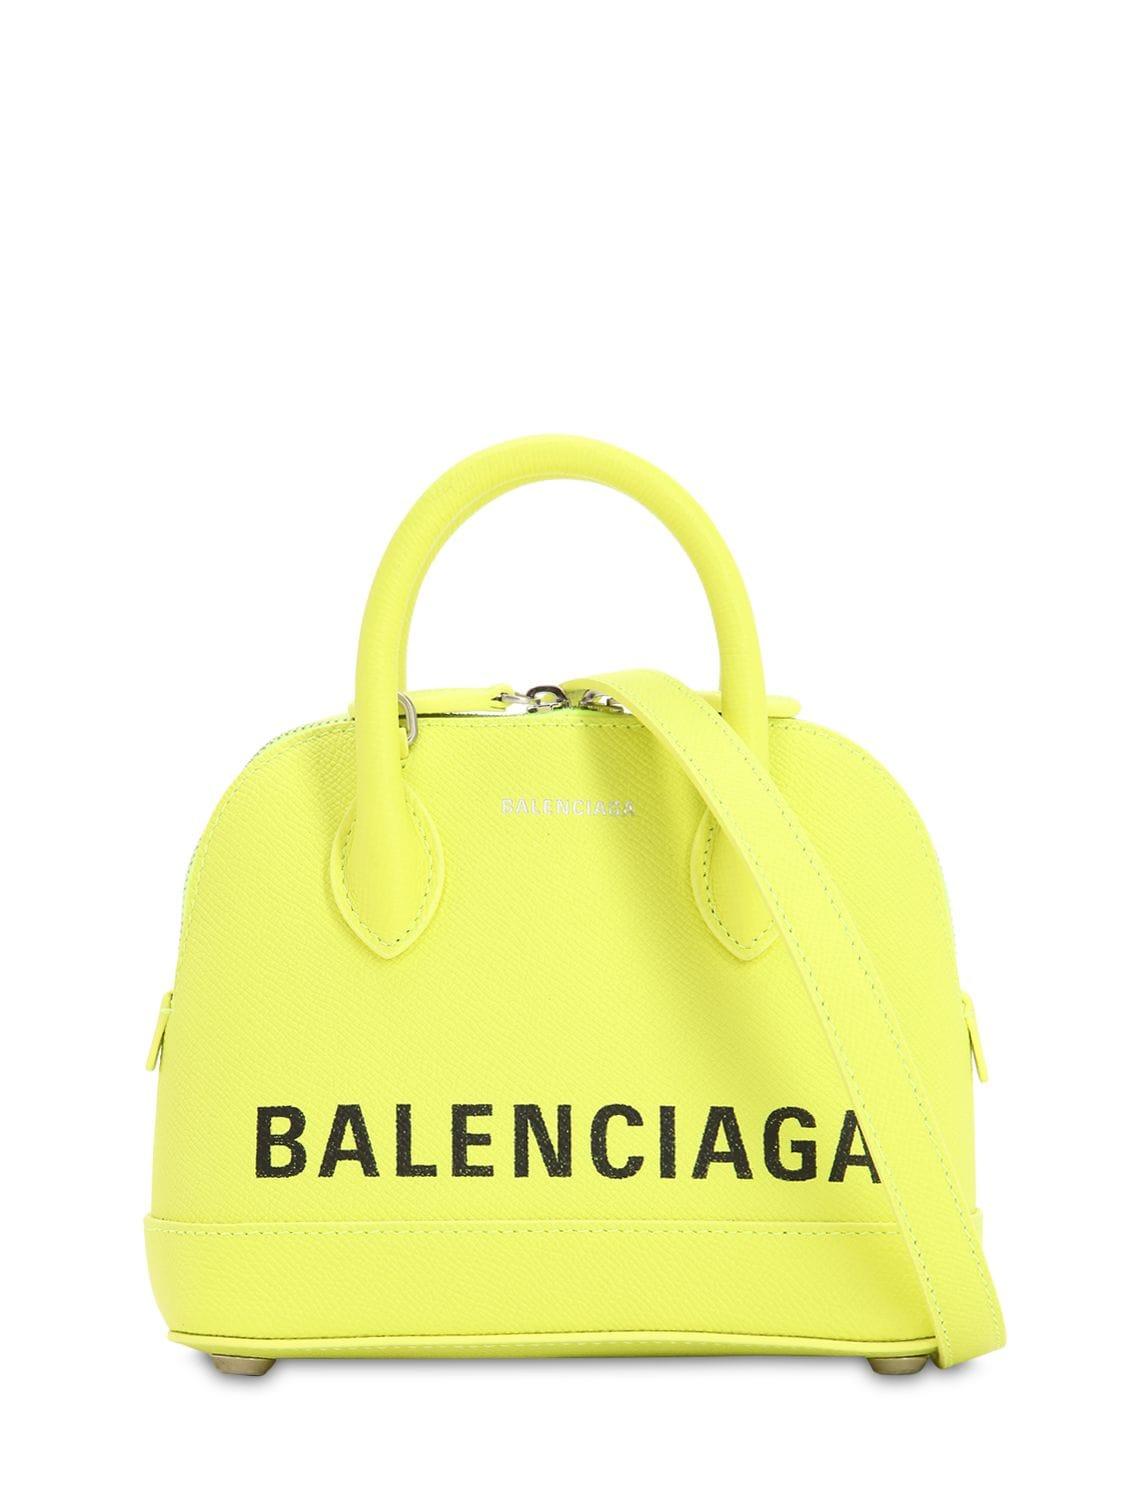 Balenciaga Xxs Ville Textured Leather Bag in Yellow | Lyst